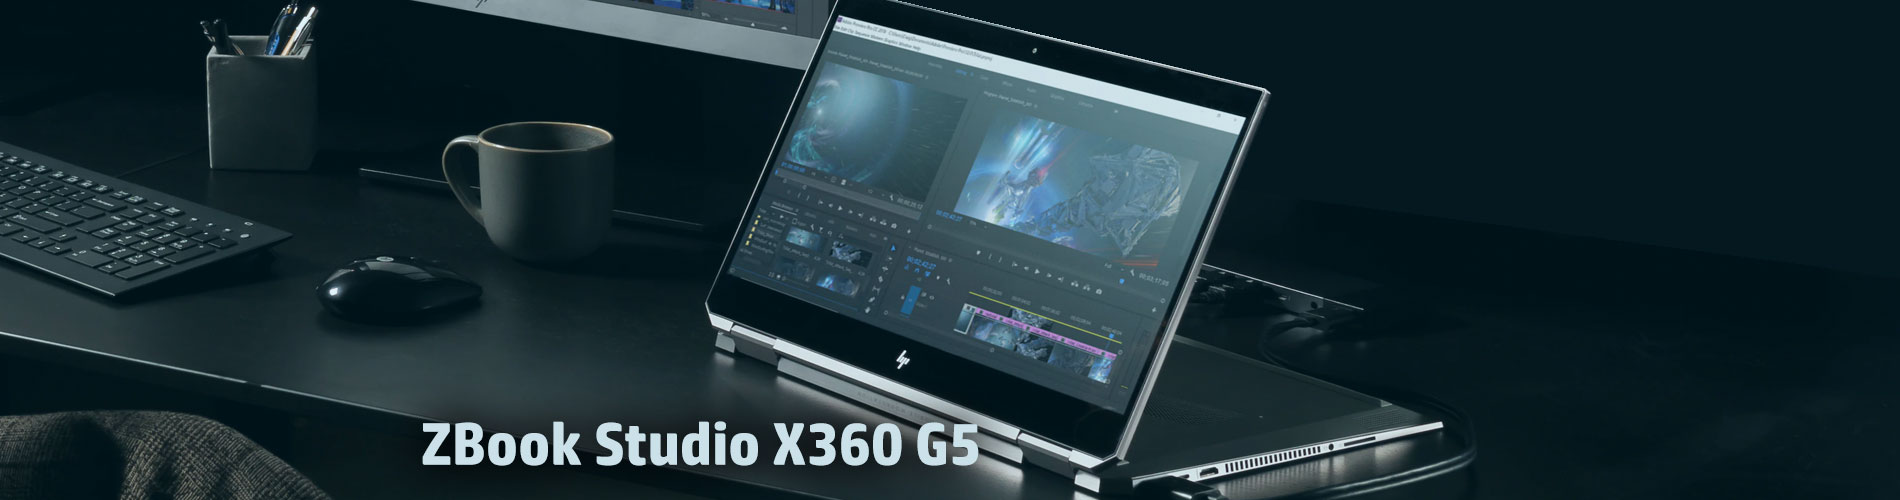 Рабочая станция HP Zbook studio x360 G5